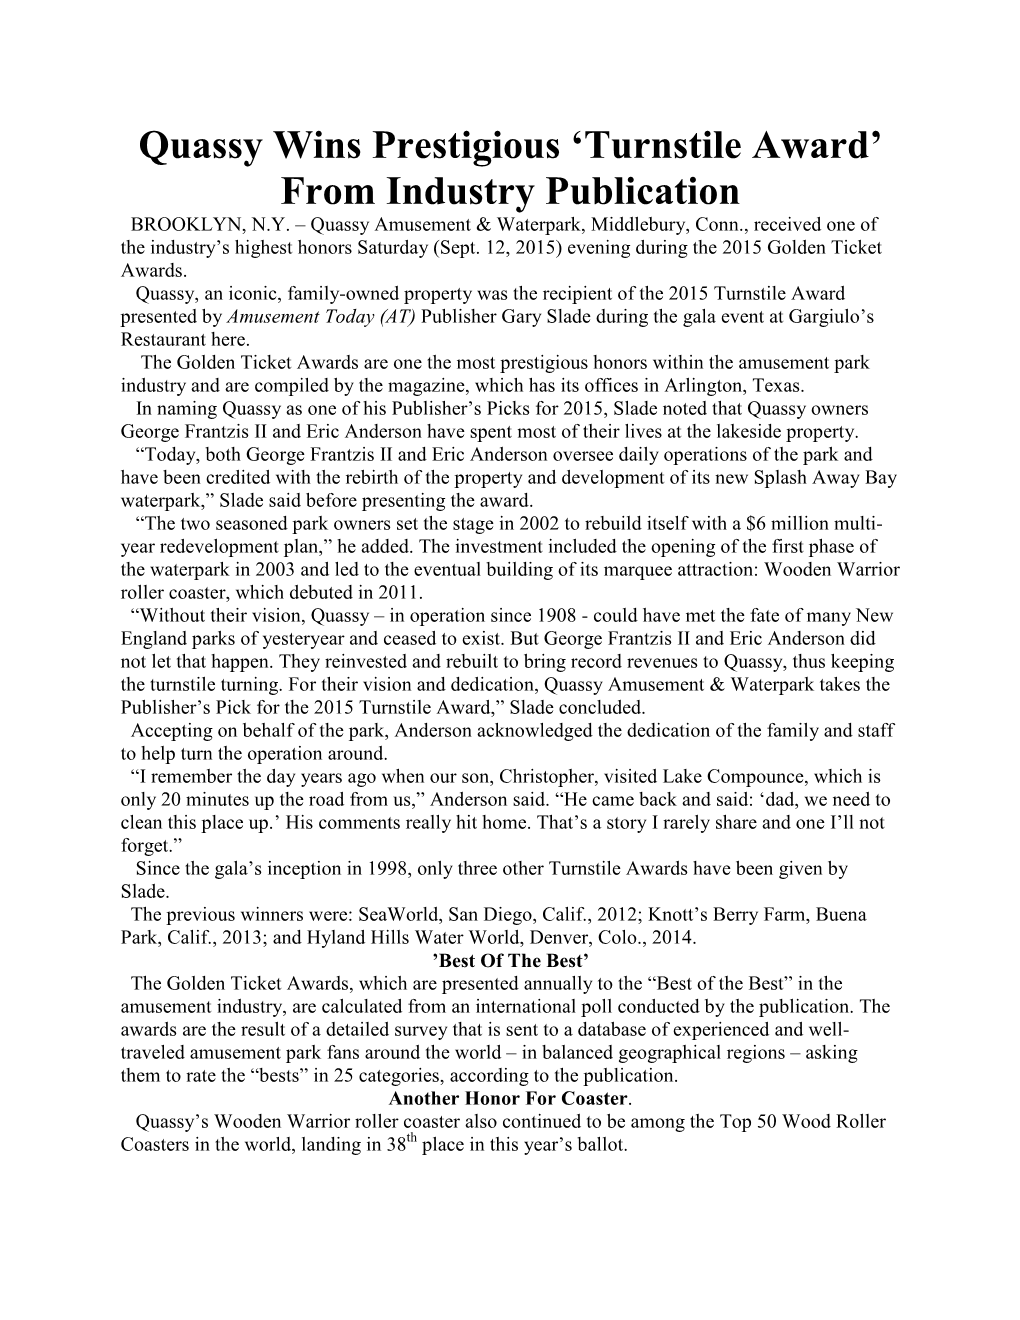 Quassy Wins Prestigious 'Turnstile Award' from Industry Publication